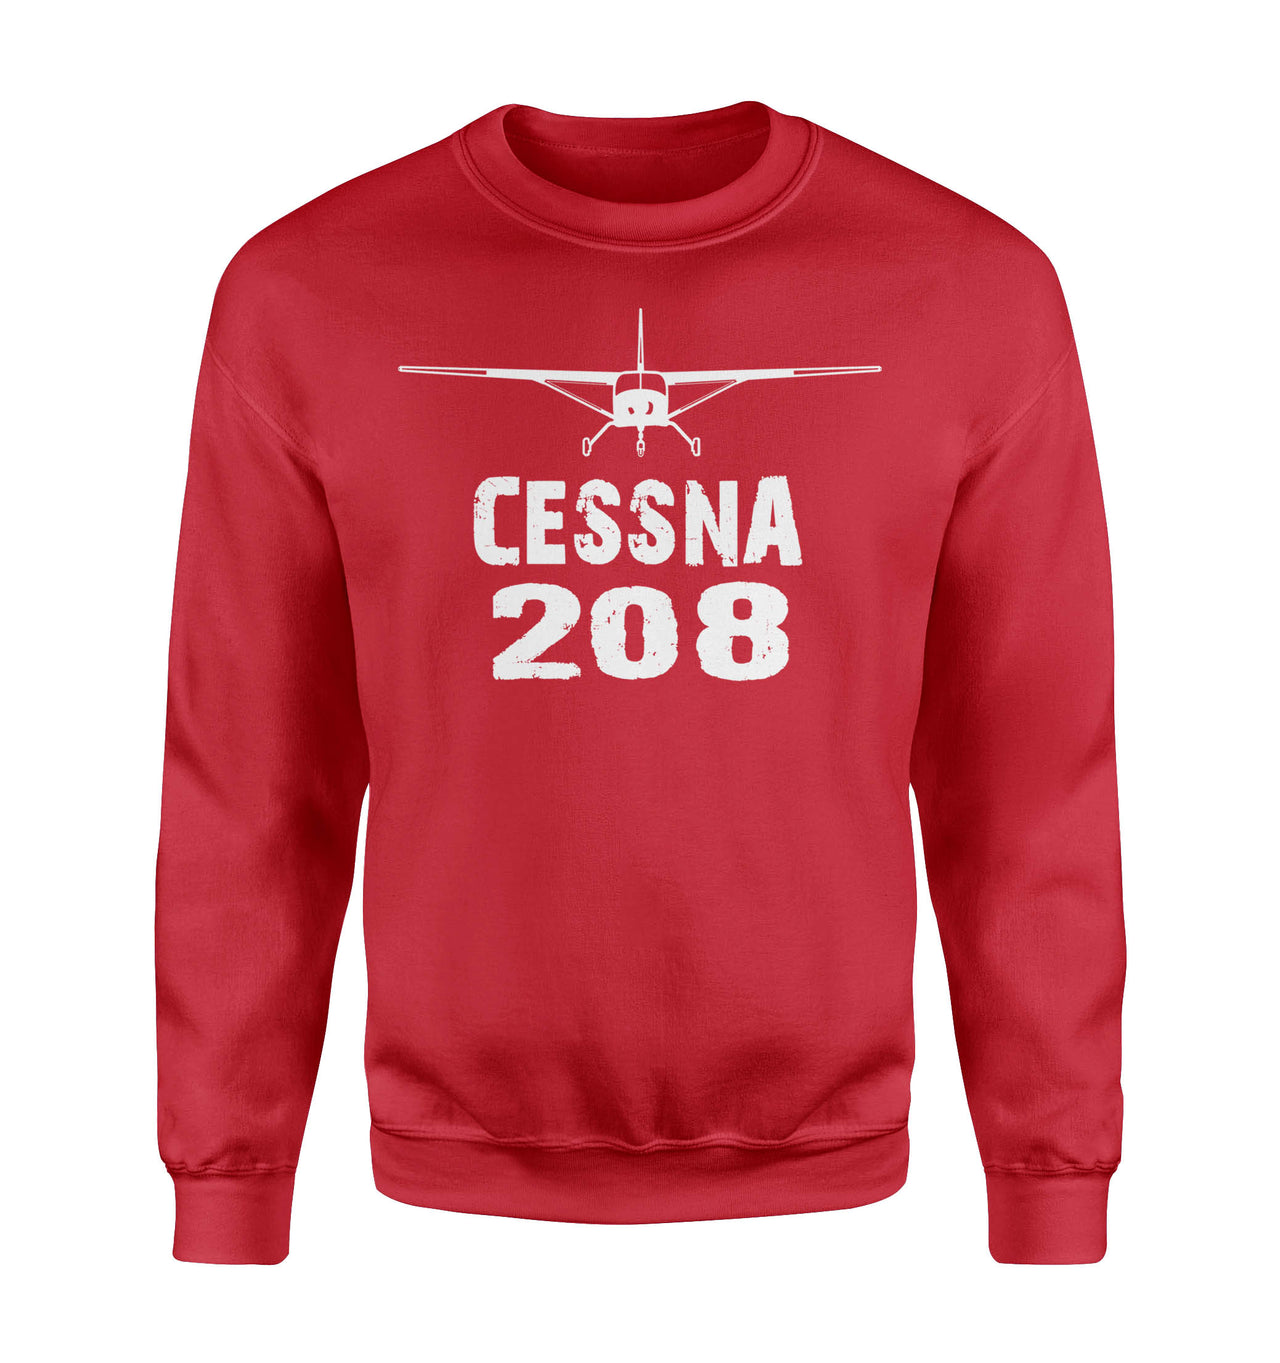 Cessna 208 & Plane Designed Sweatshirts